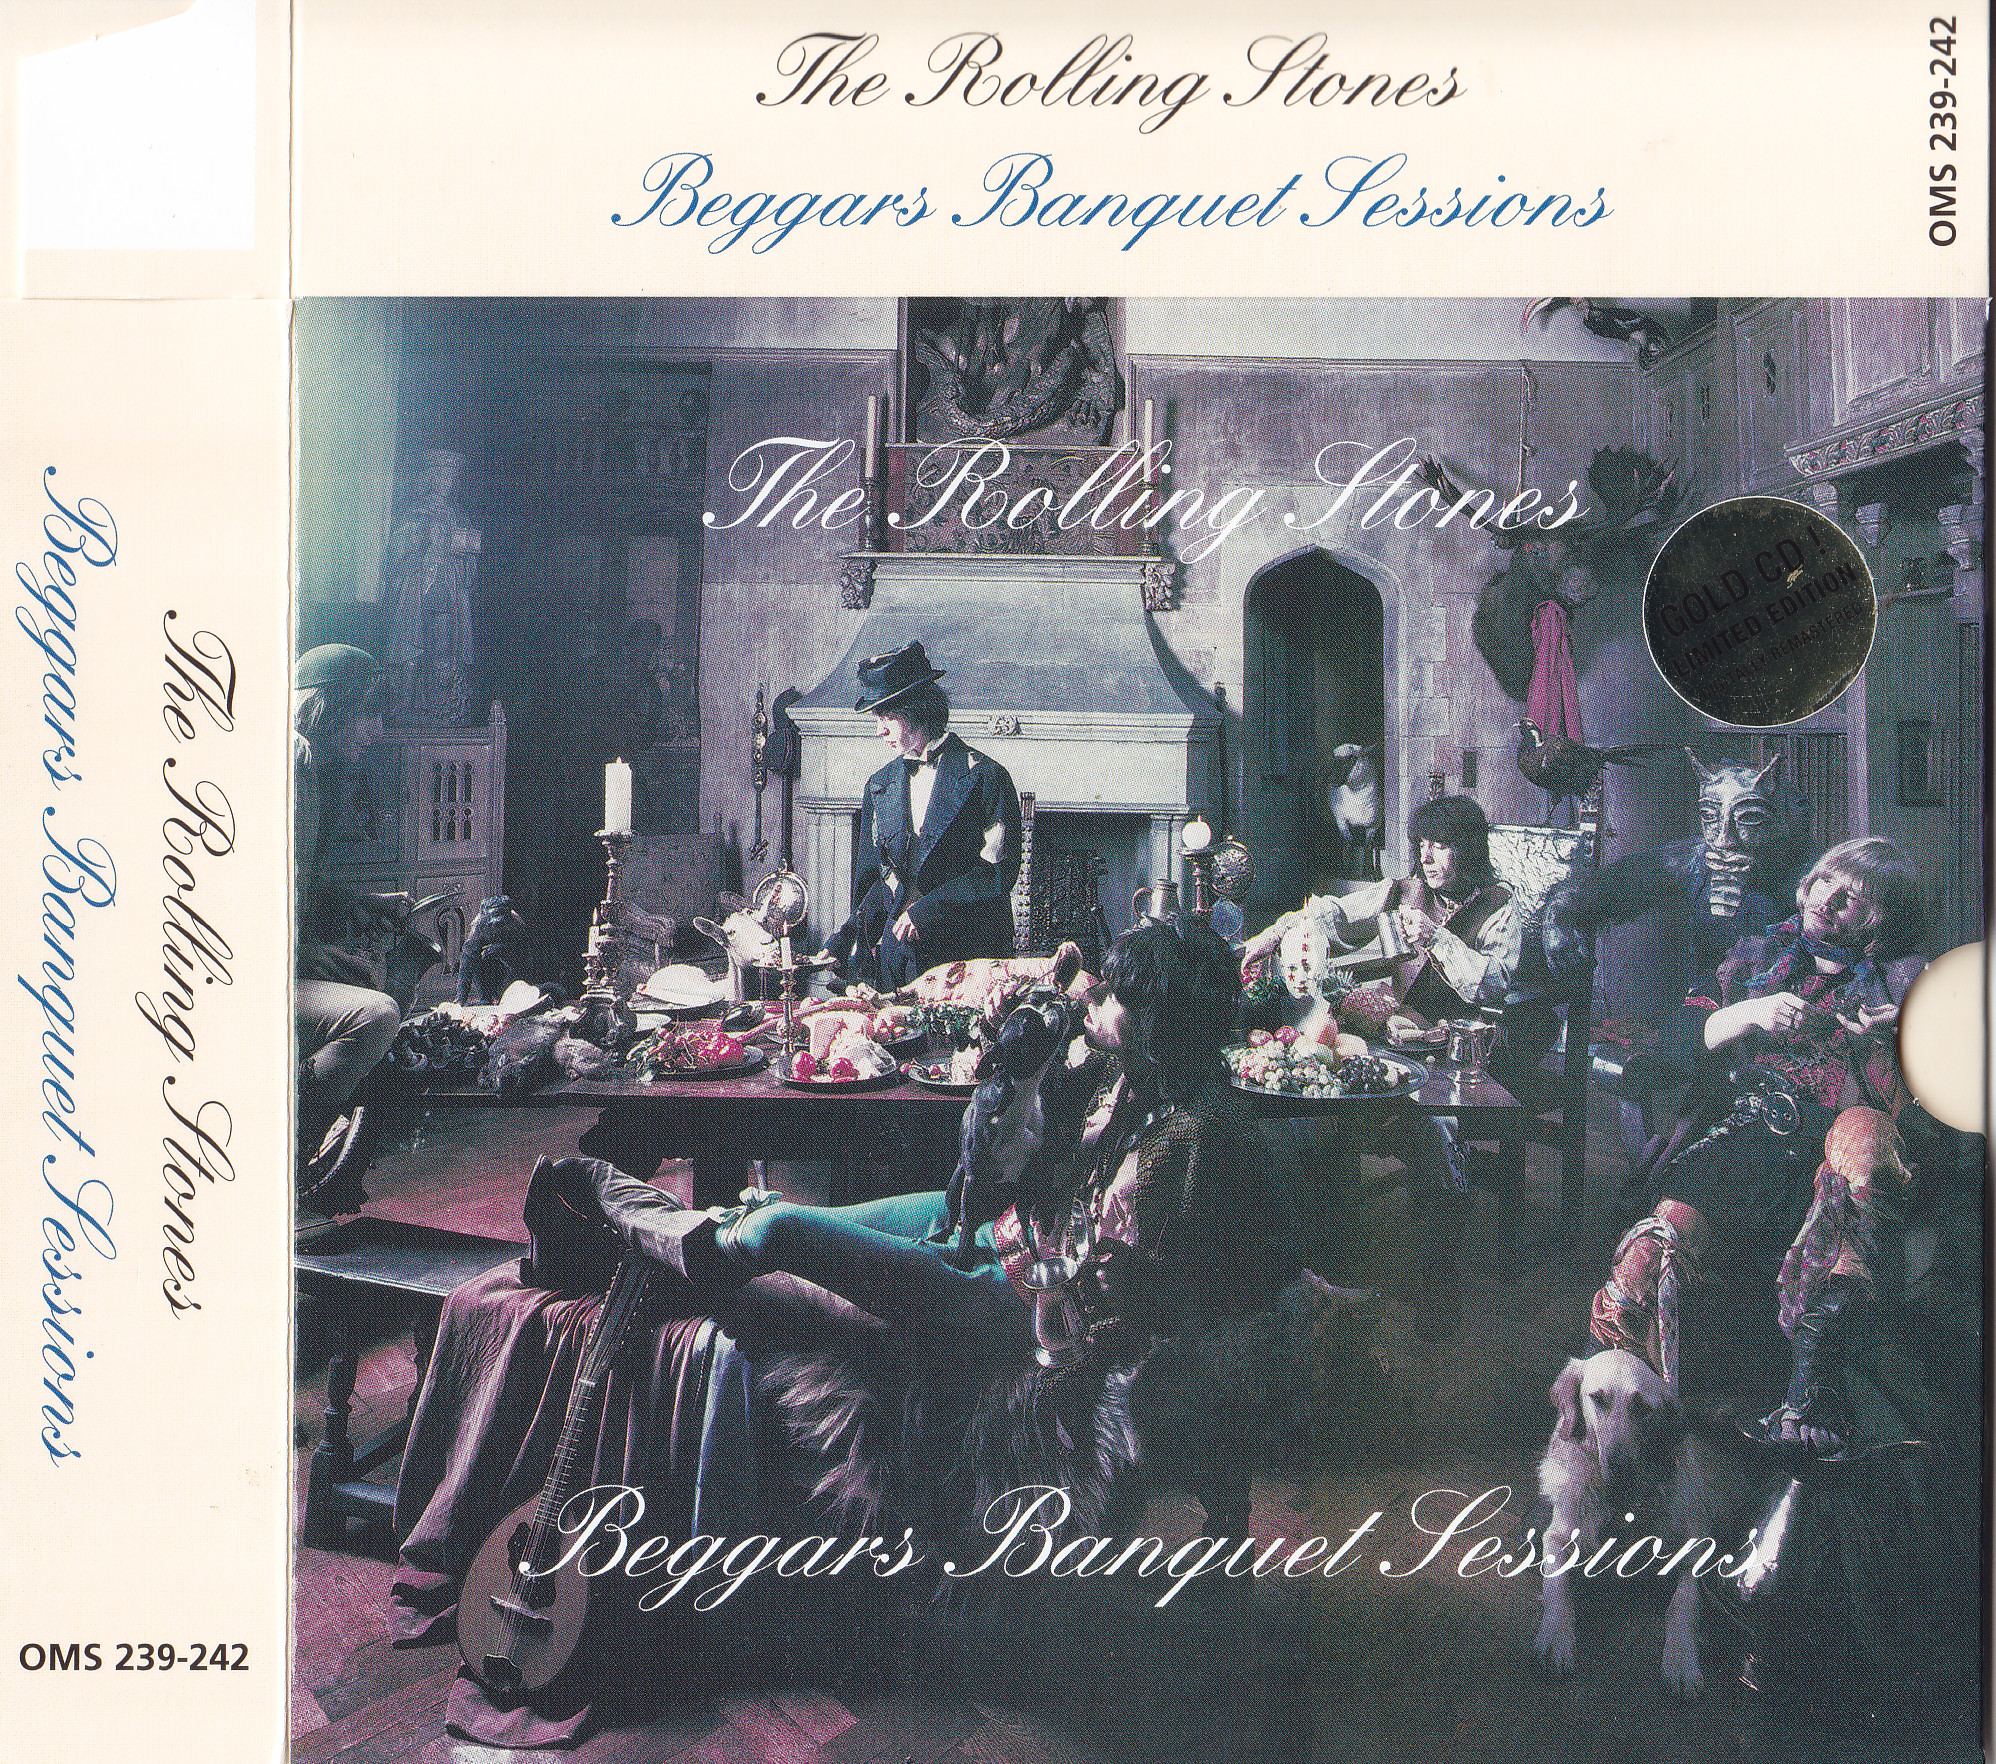 Rolling Stones / Beggars Banquet Sessions / 4CD Gold+1Gold Bonus